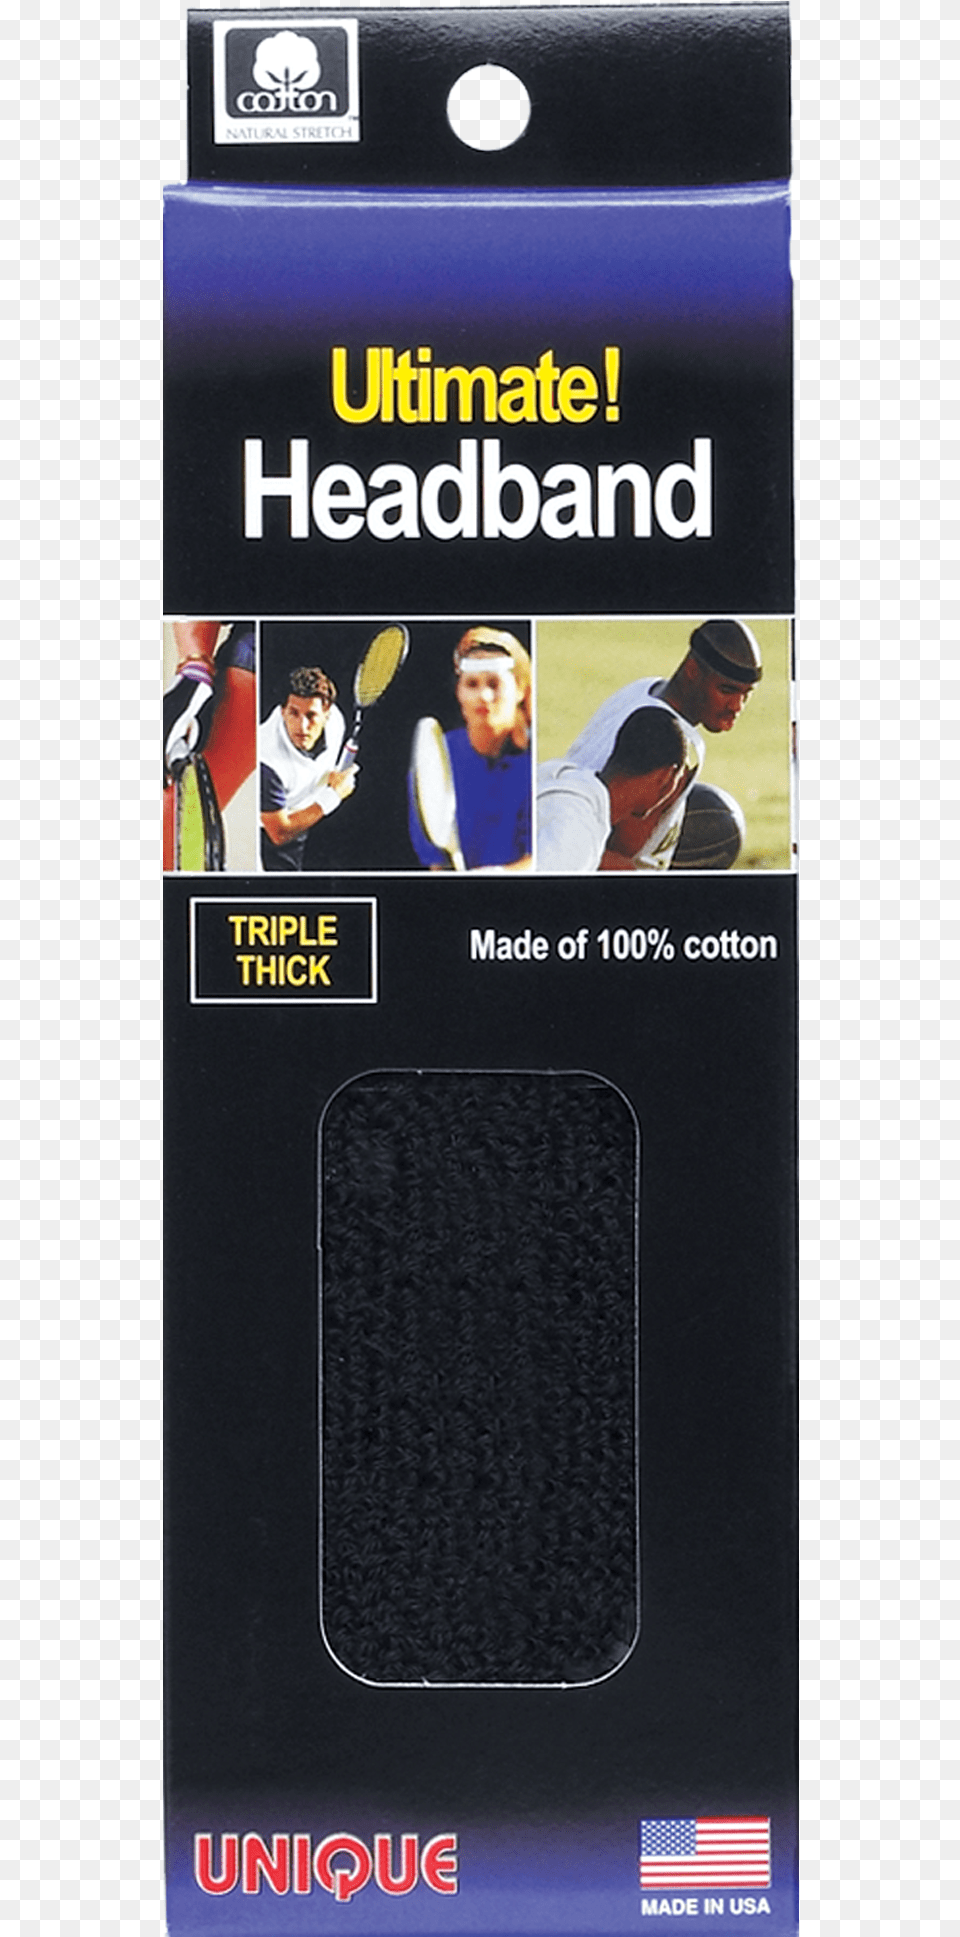 Ultimate Headband Black Unique Ultimate Headband Black, Adult, Female, Male, Man Png Image